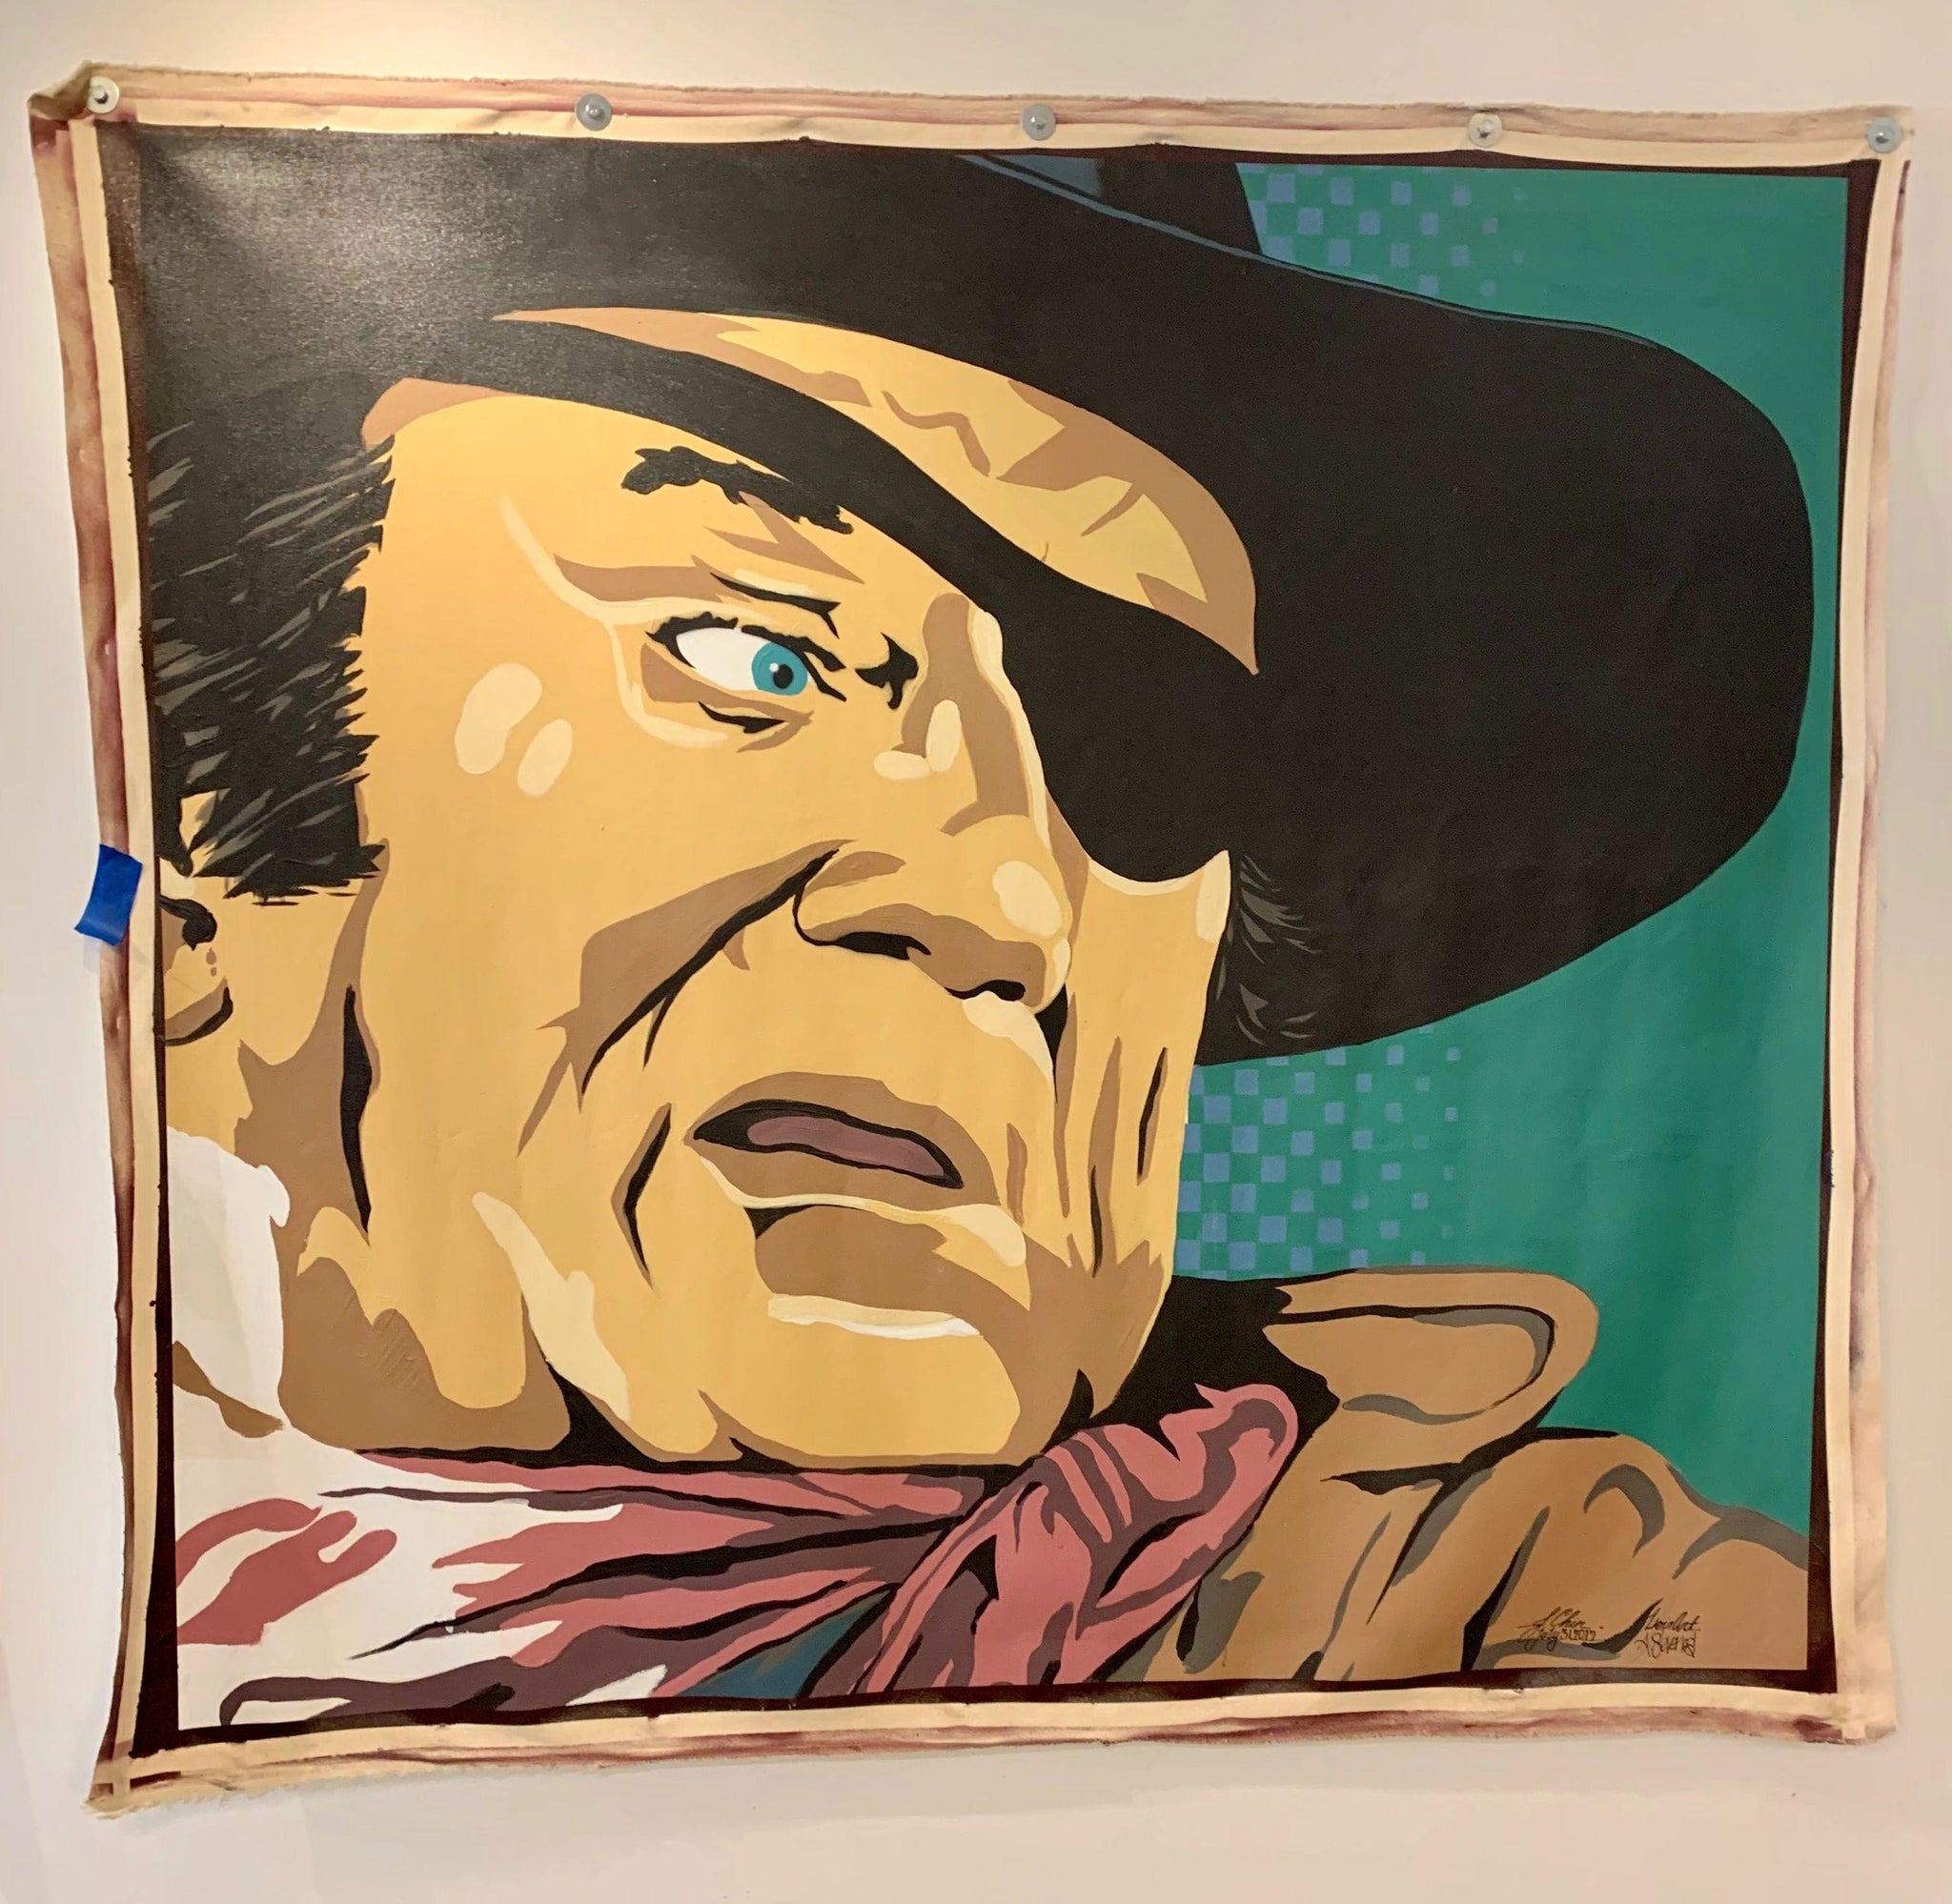 Original Extra Large 6' x 6' "John Wayne" Canvas by J Chin